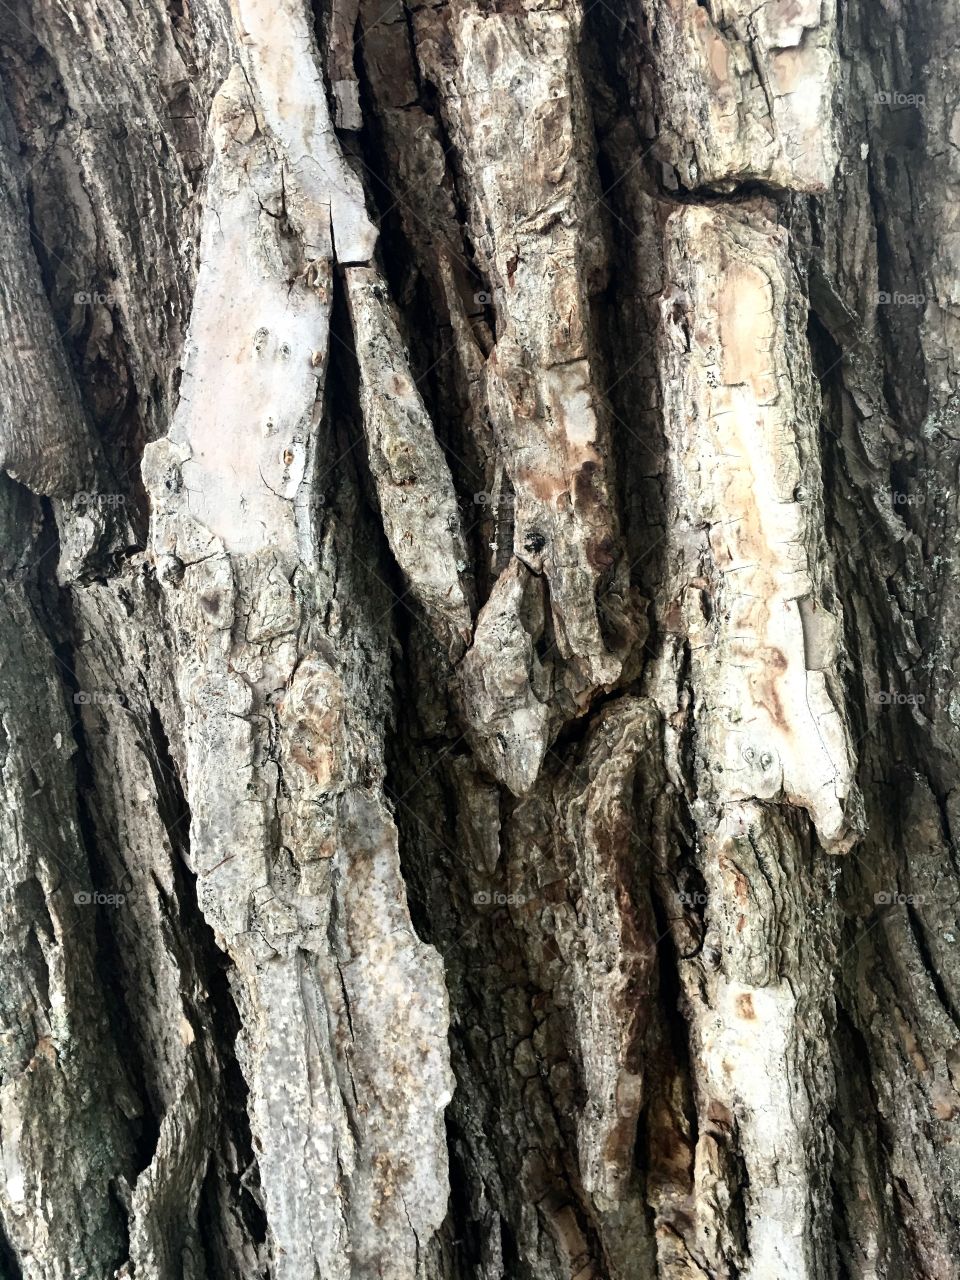 Willow bark M